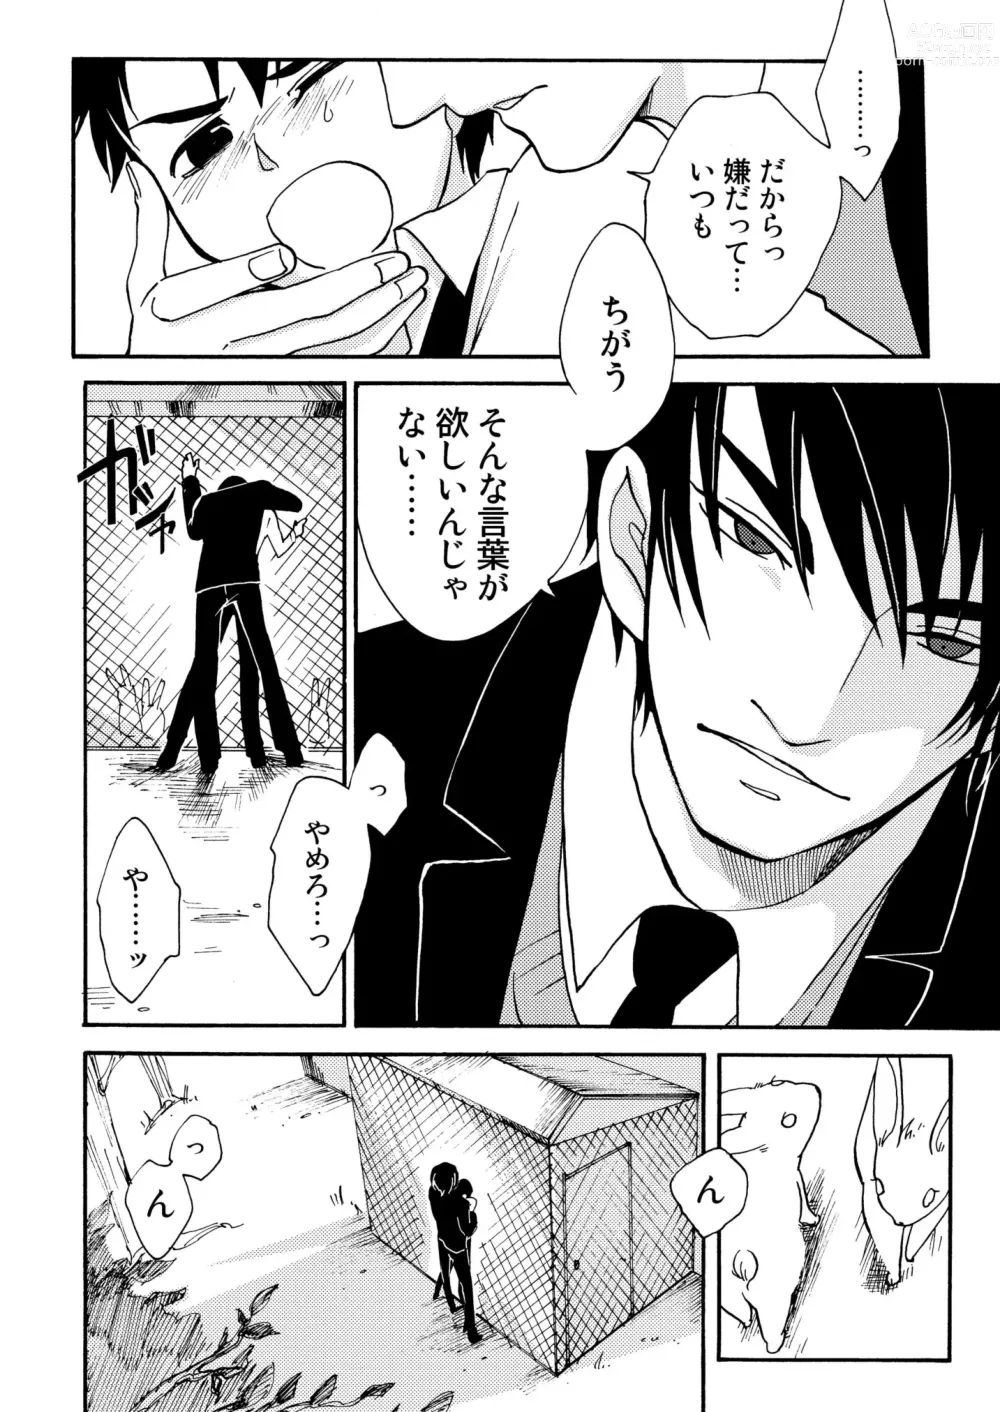 Page 4 of doujinshi Usagi no Koe